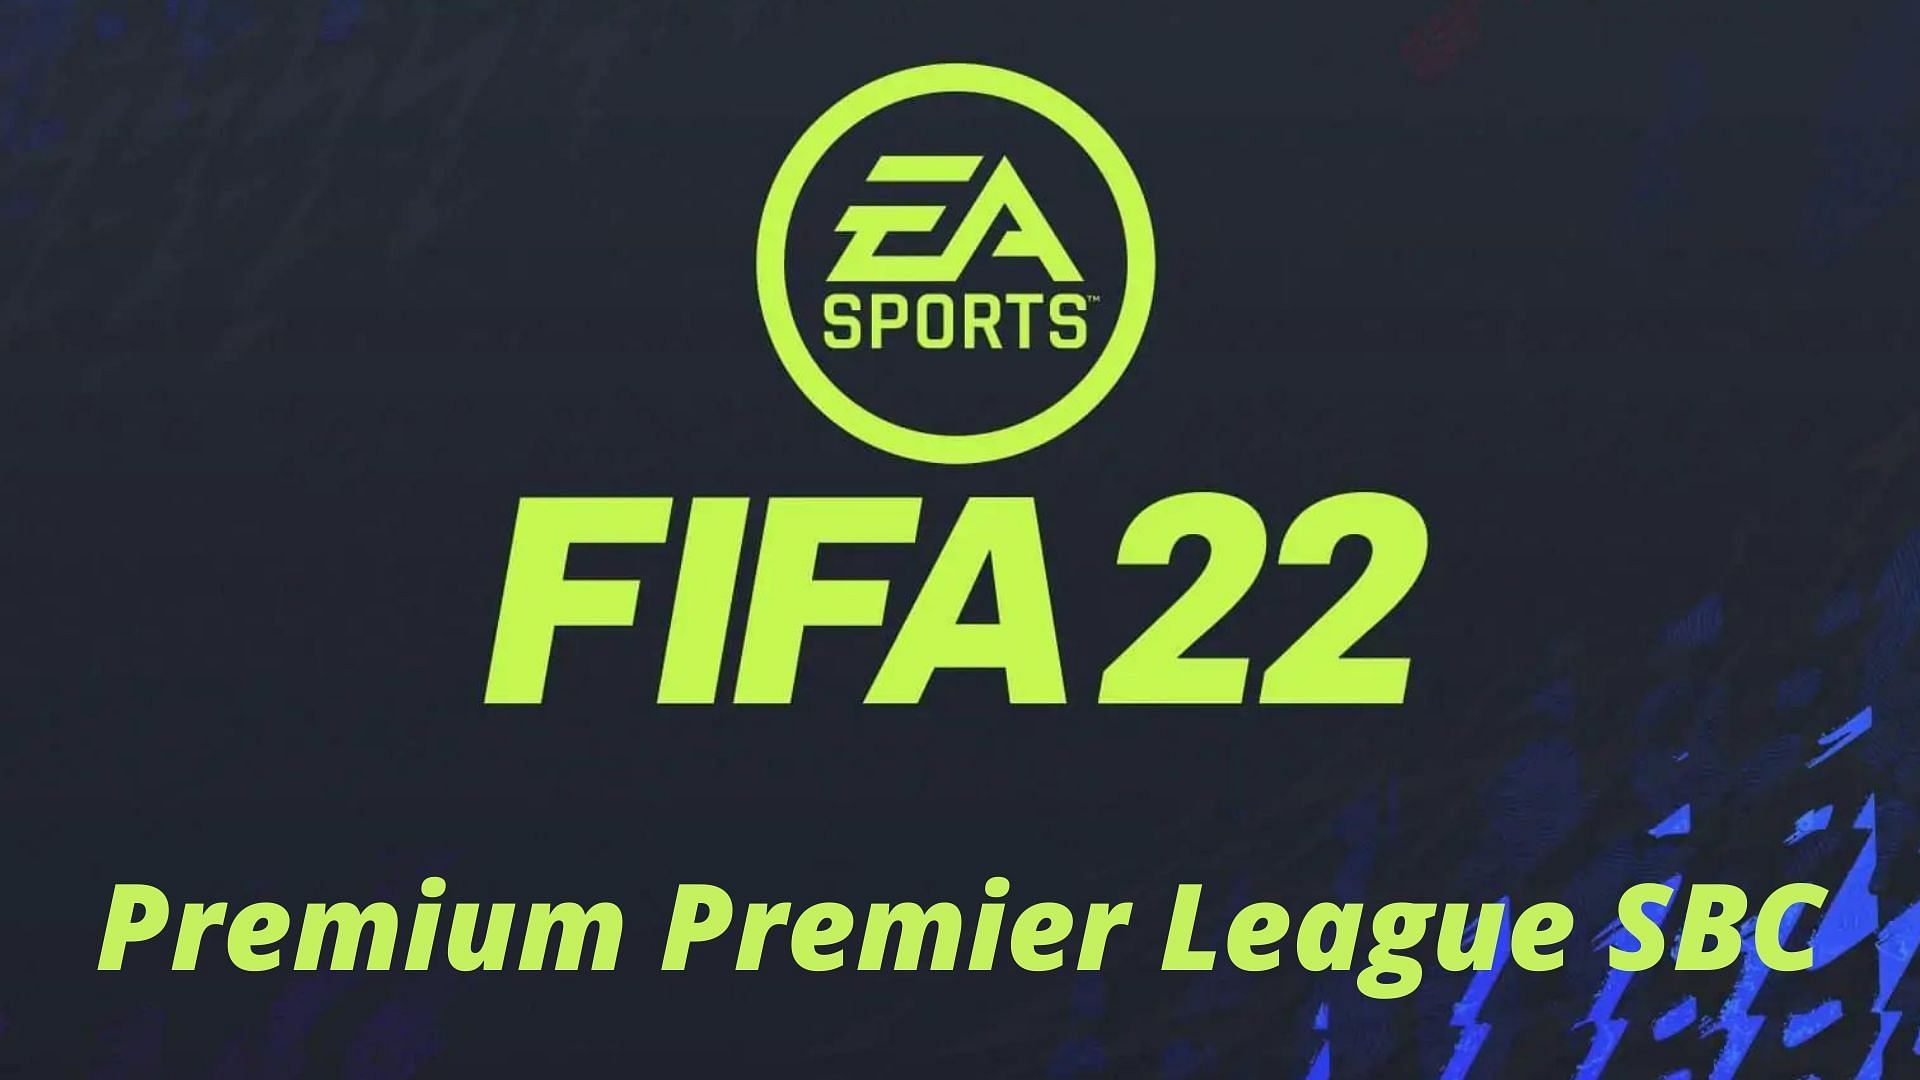 Premium Premier League Upgrade SBC is now live in FIFA 22 (Image via Sportskeeda)